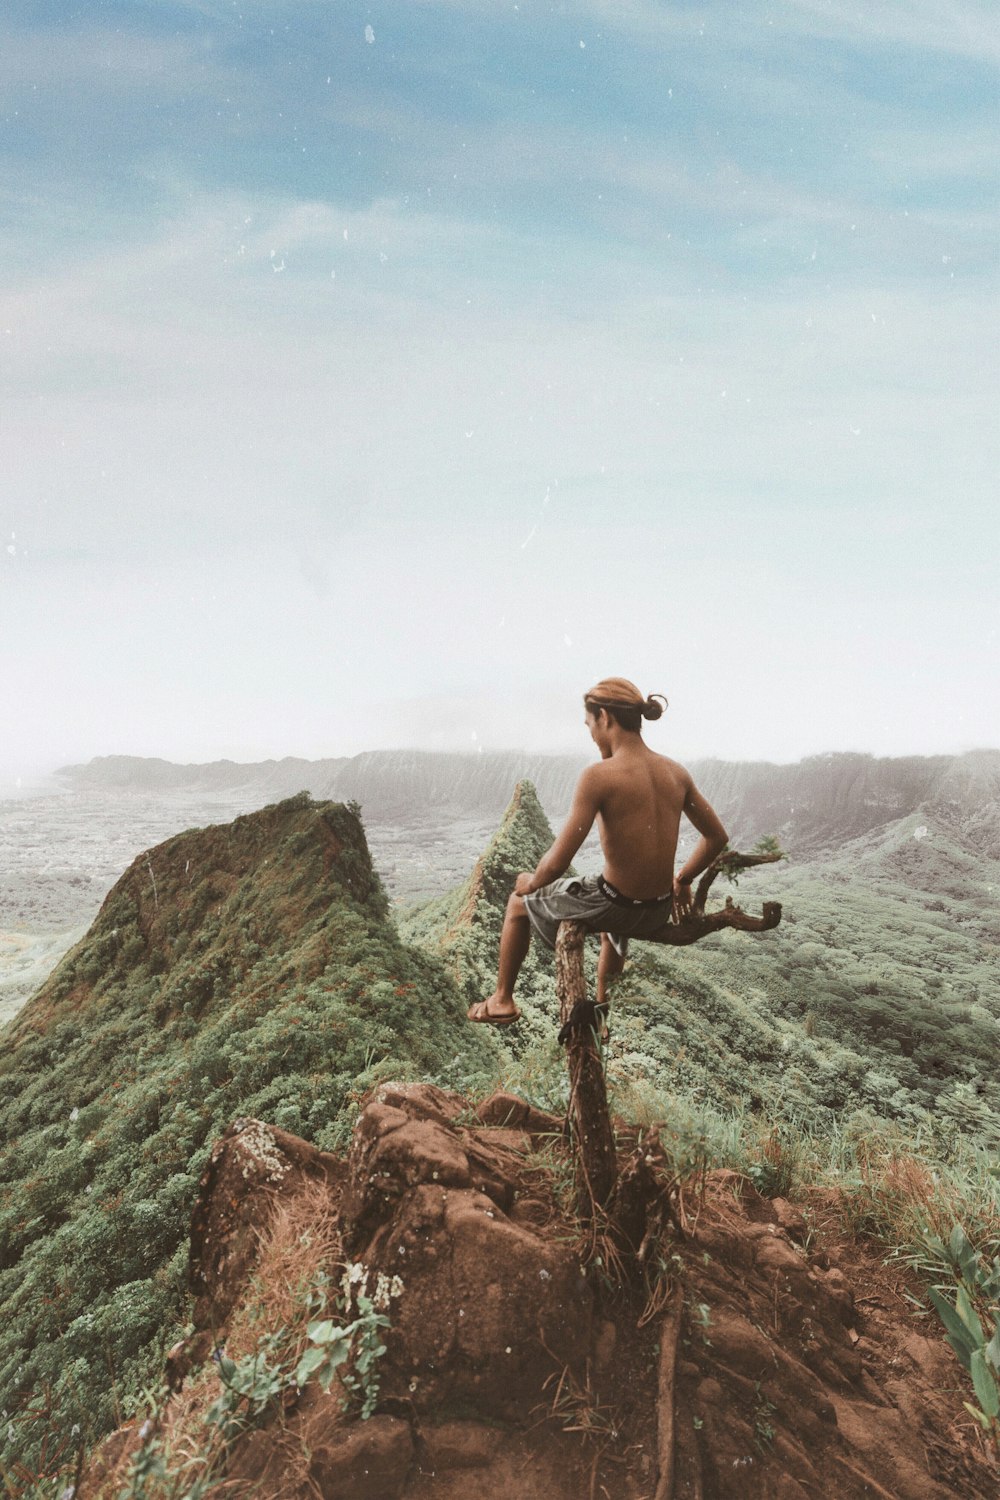 man sitting on tree branch above mountain